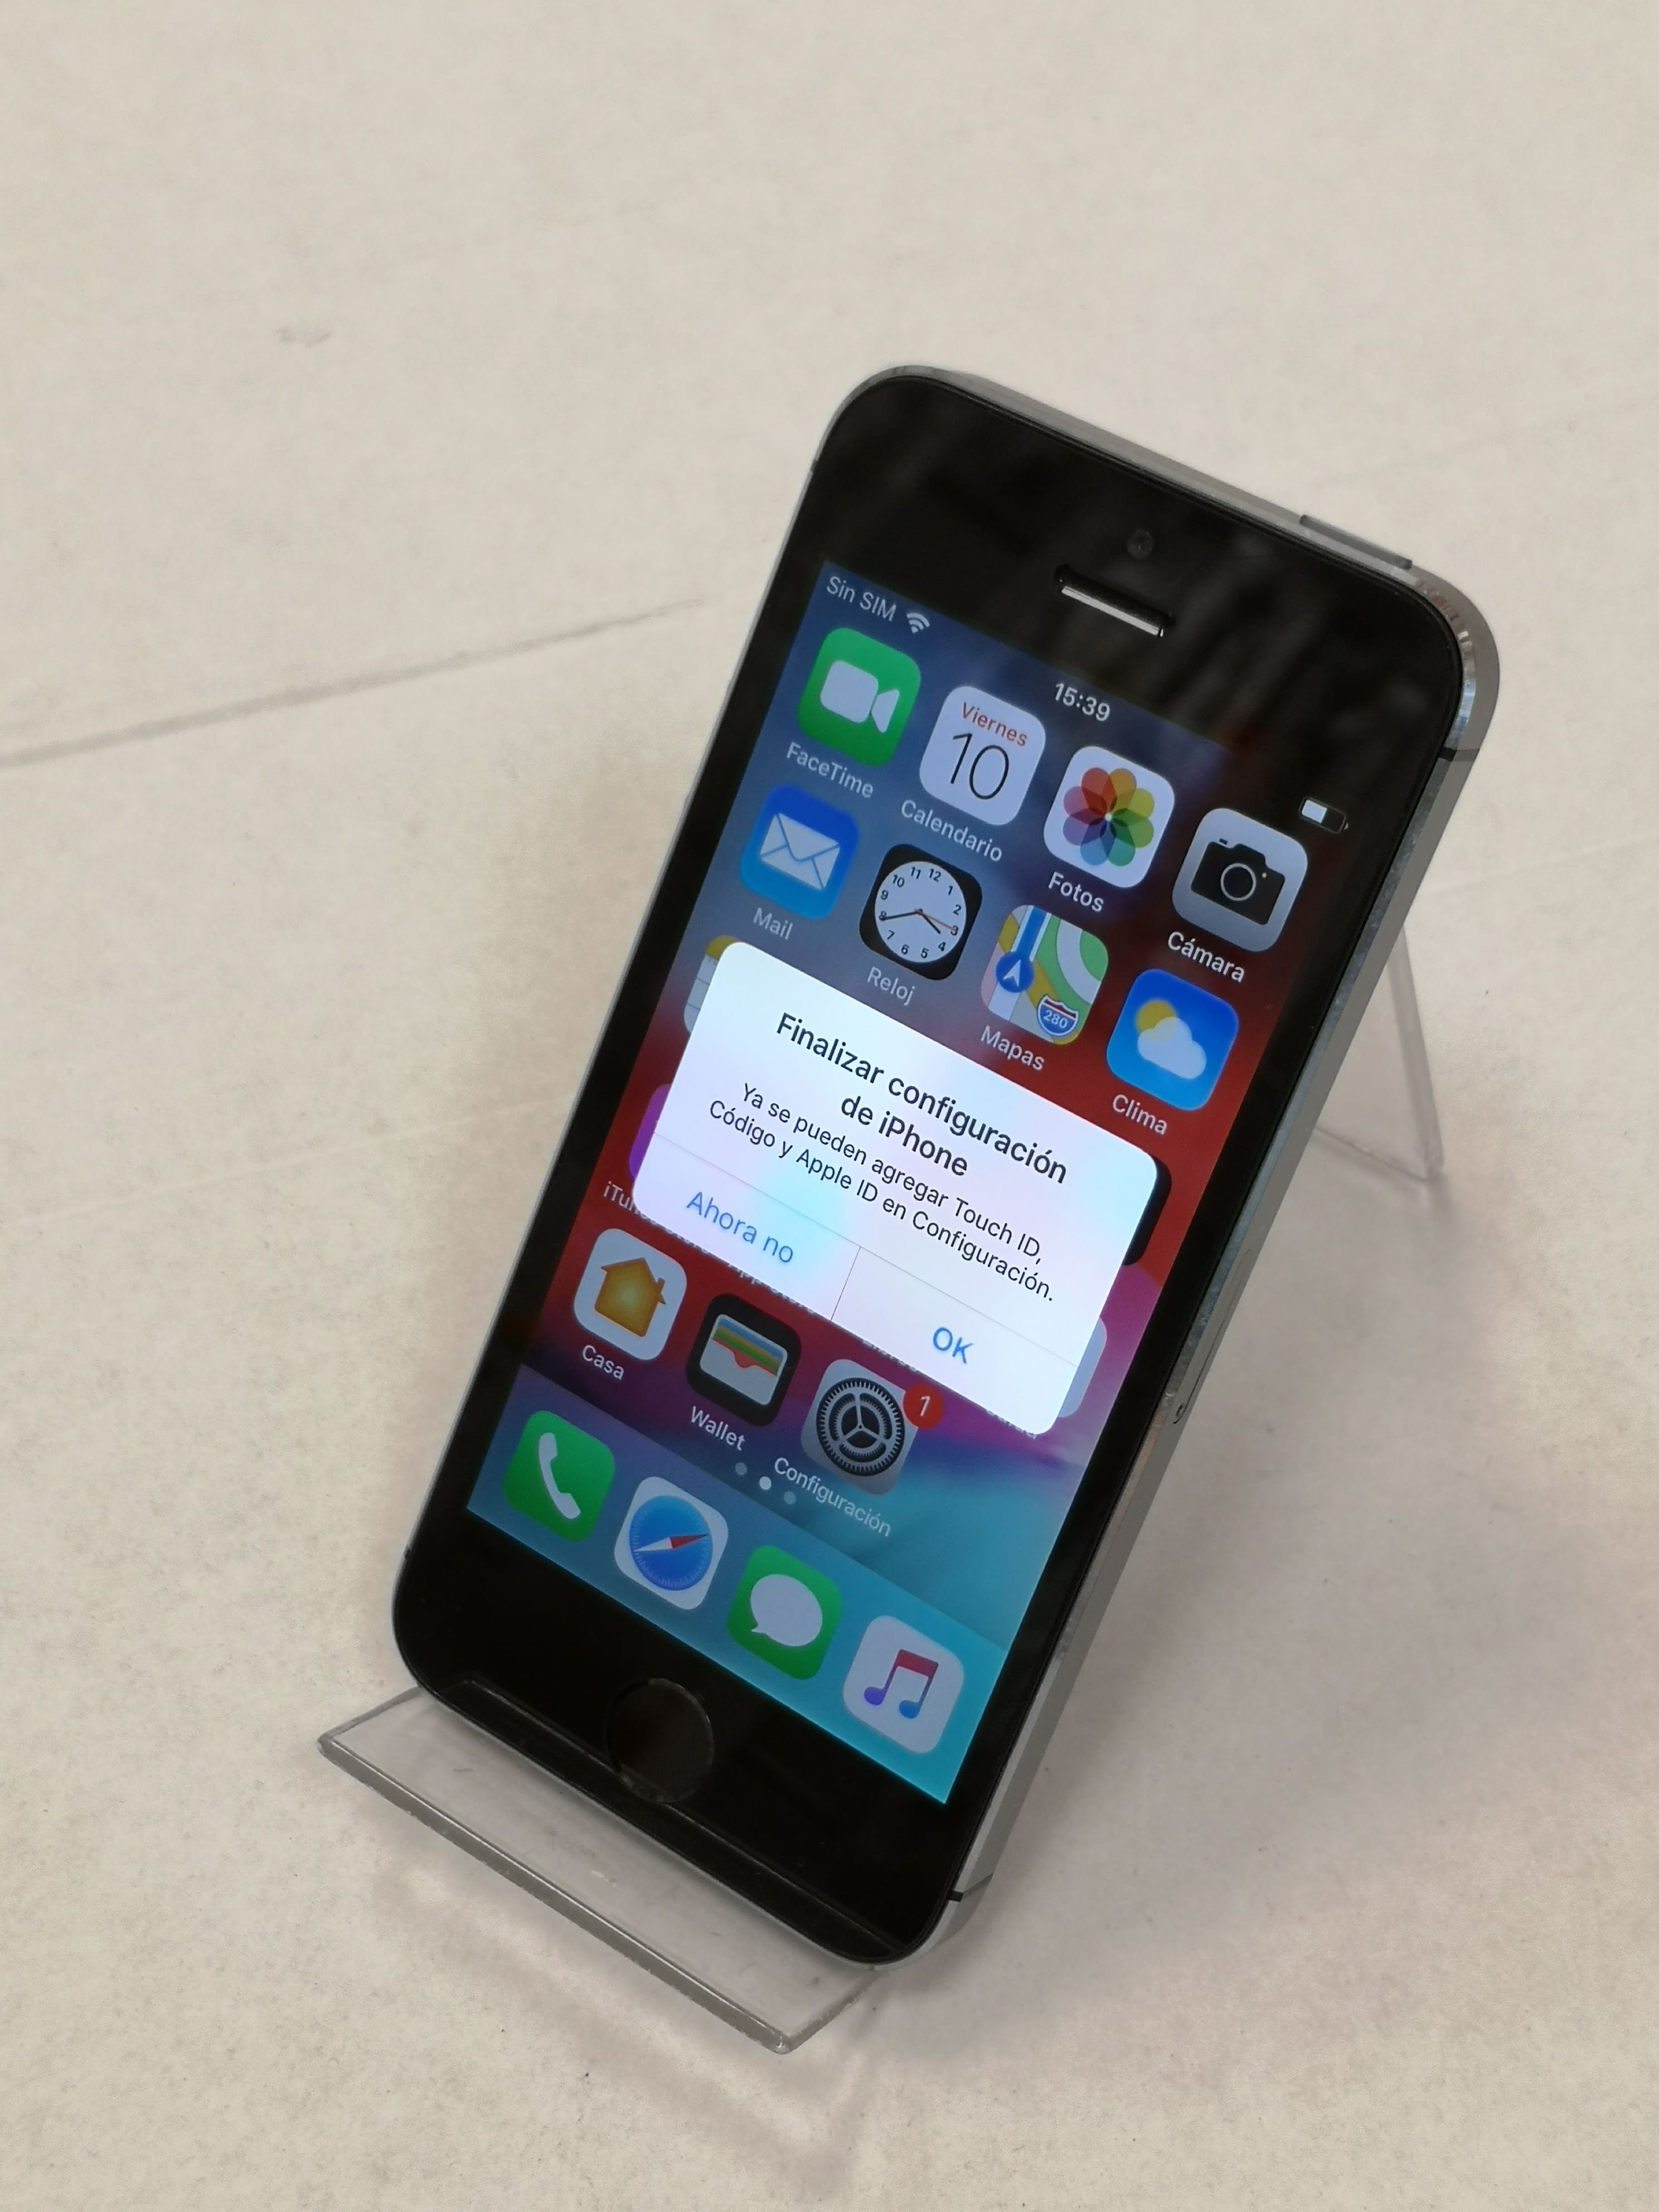 iPhone 5s スペースグレイ 16GB - スマートフォン本体